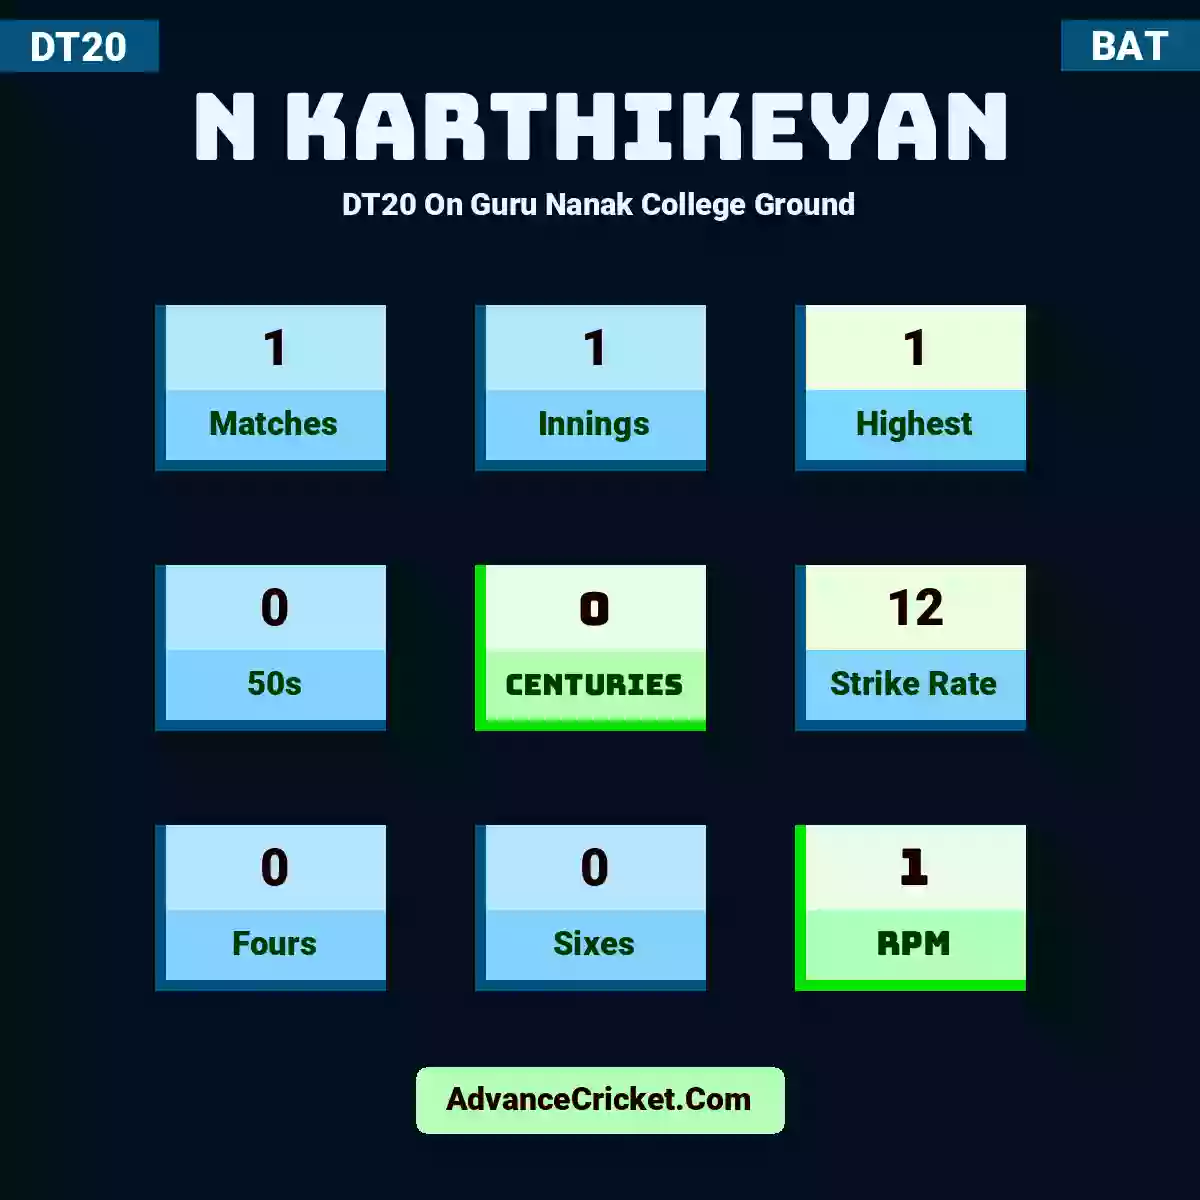 N Karthikeyan DT20  On Guru Nanak College Ground, N Karthikeyan played 1 matches, scored 1 runs as highest, 0 half-centuries, and 0 centuries, with a strike rate of 12. N.Karthikeyan hit 0 fours and 0 sixes, with an RPM of 1.